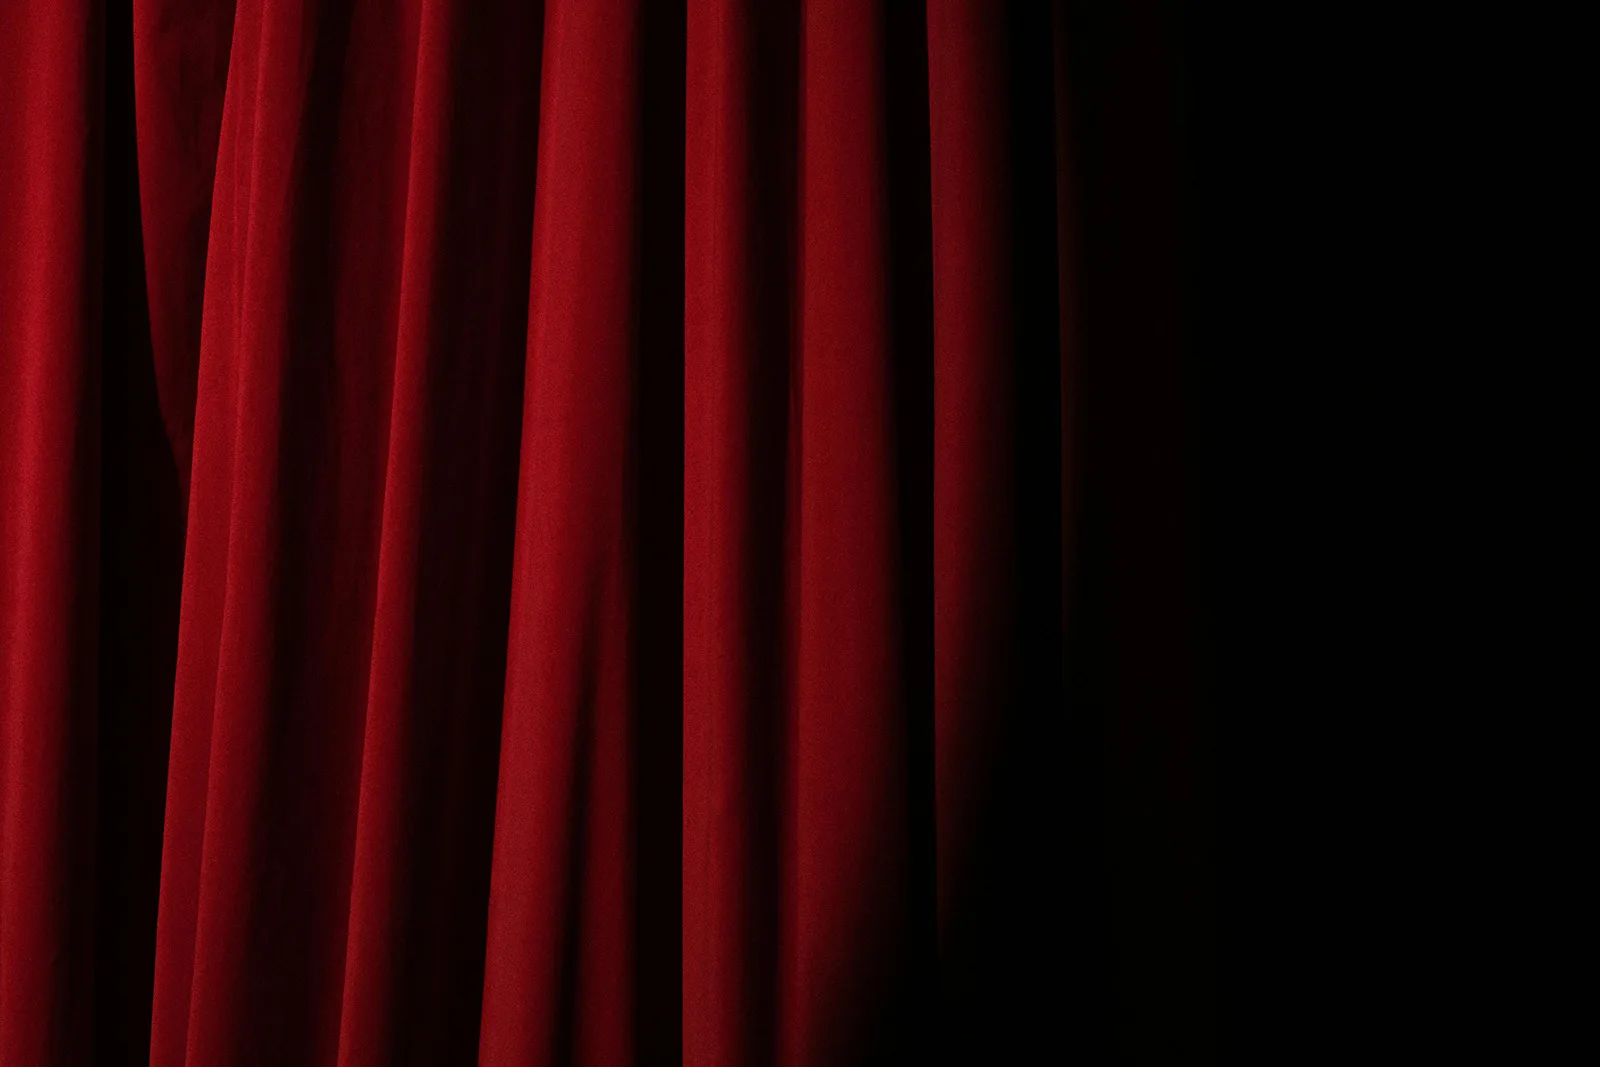 Foix theater cafe curtain